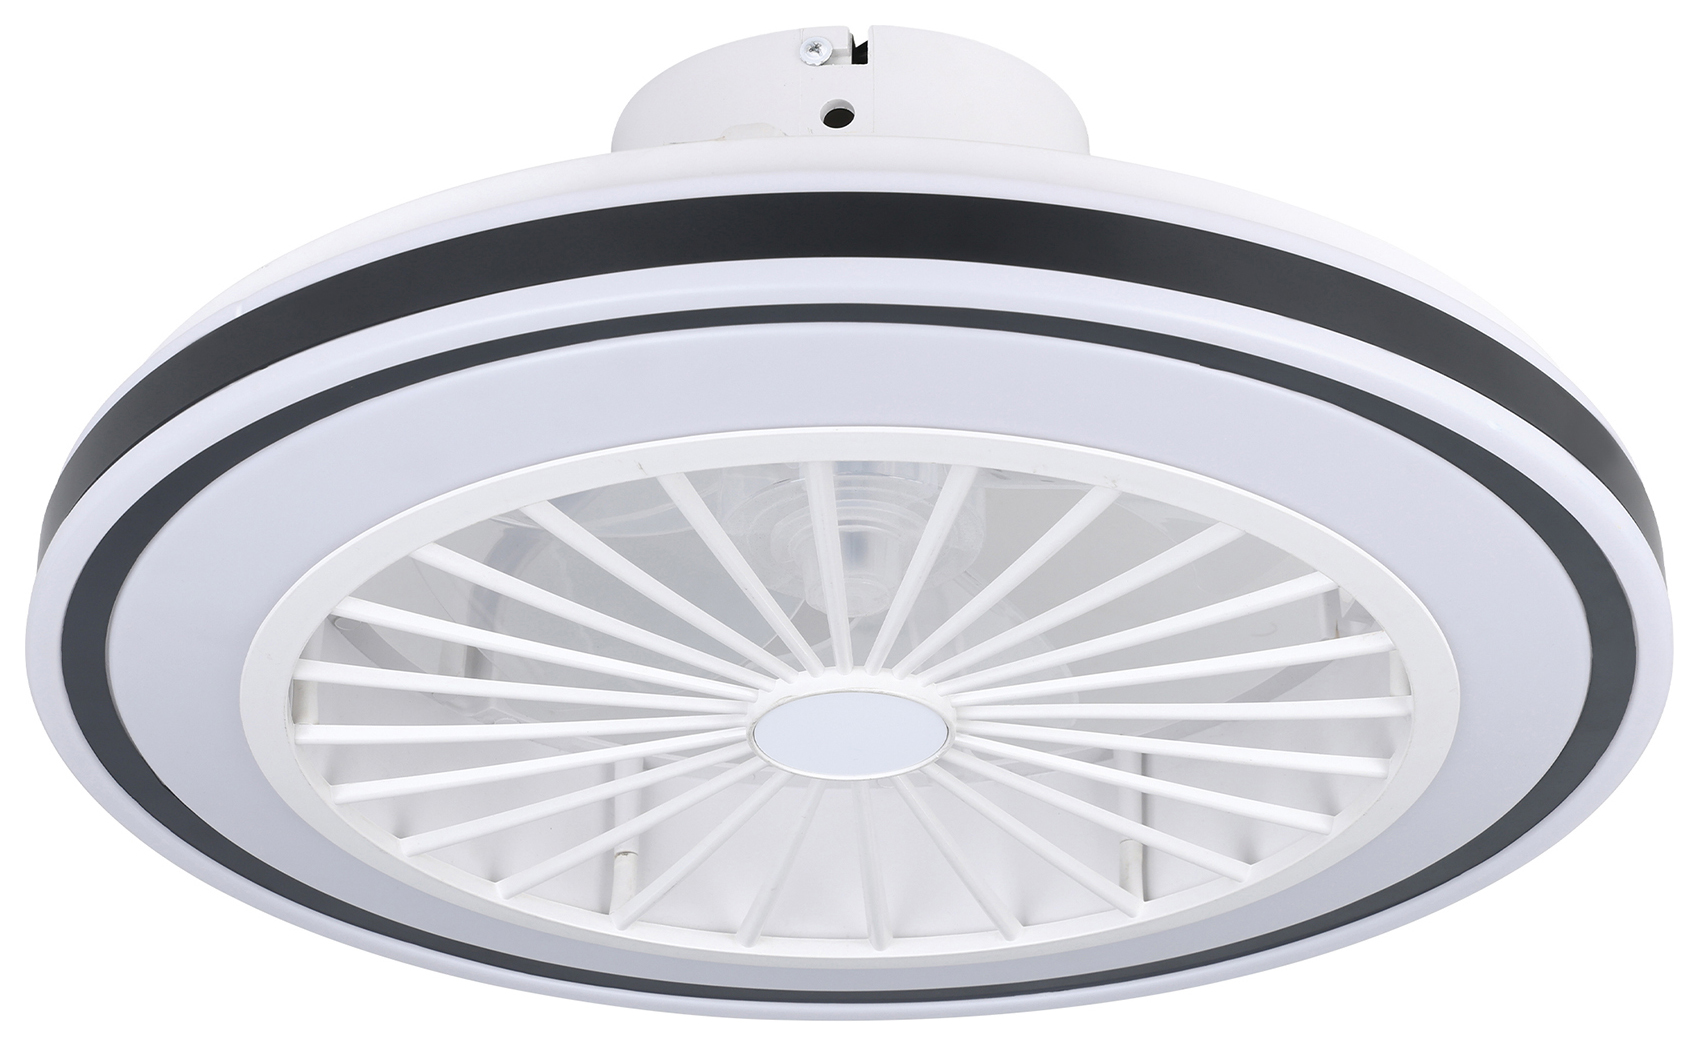 Eglo Almeria White Compact Ceiling Fan with Light